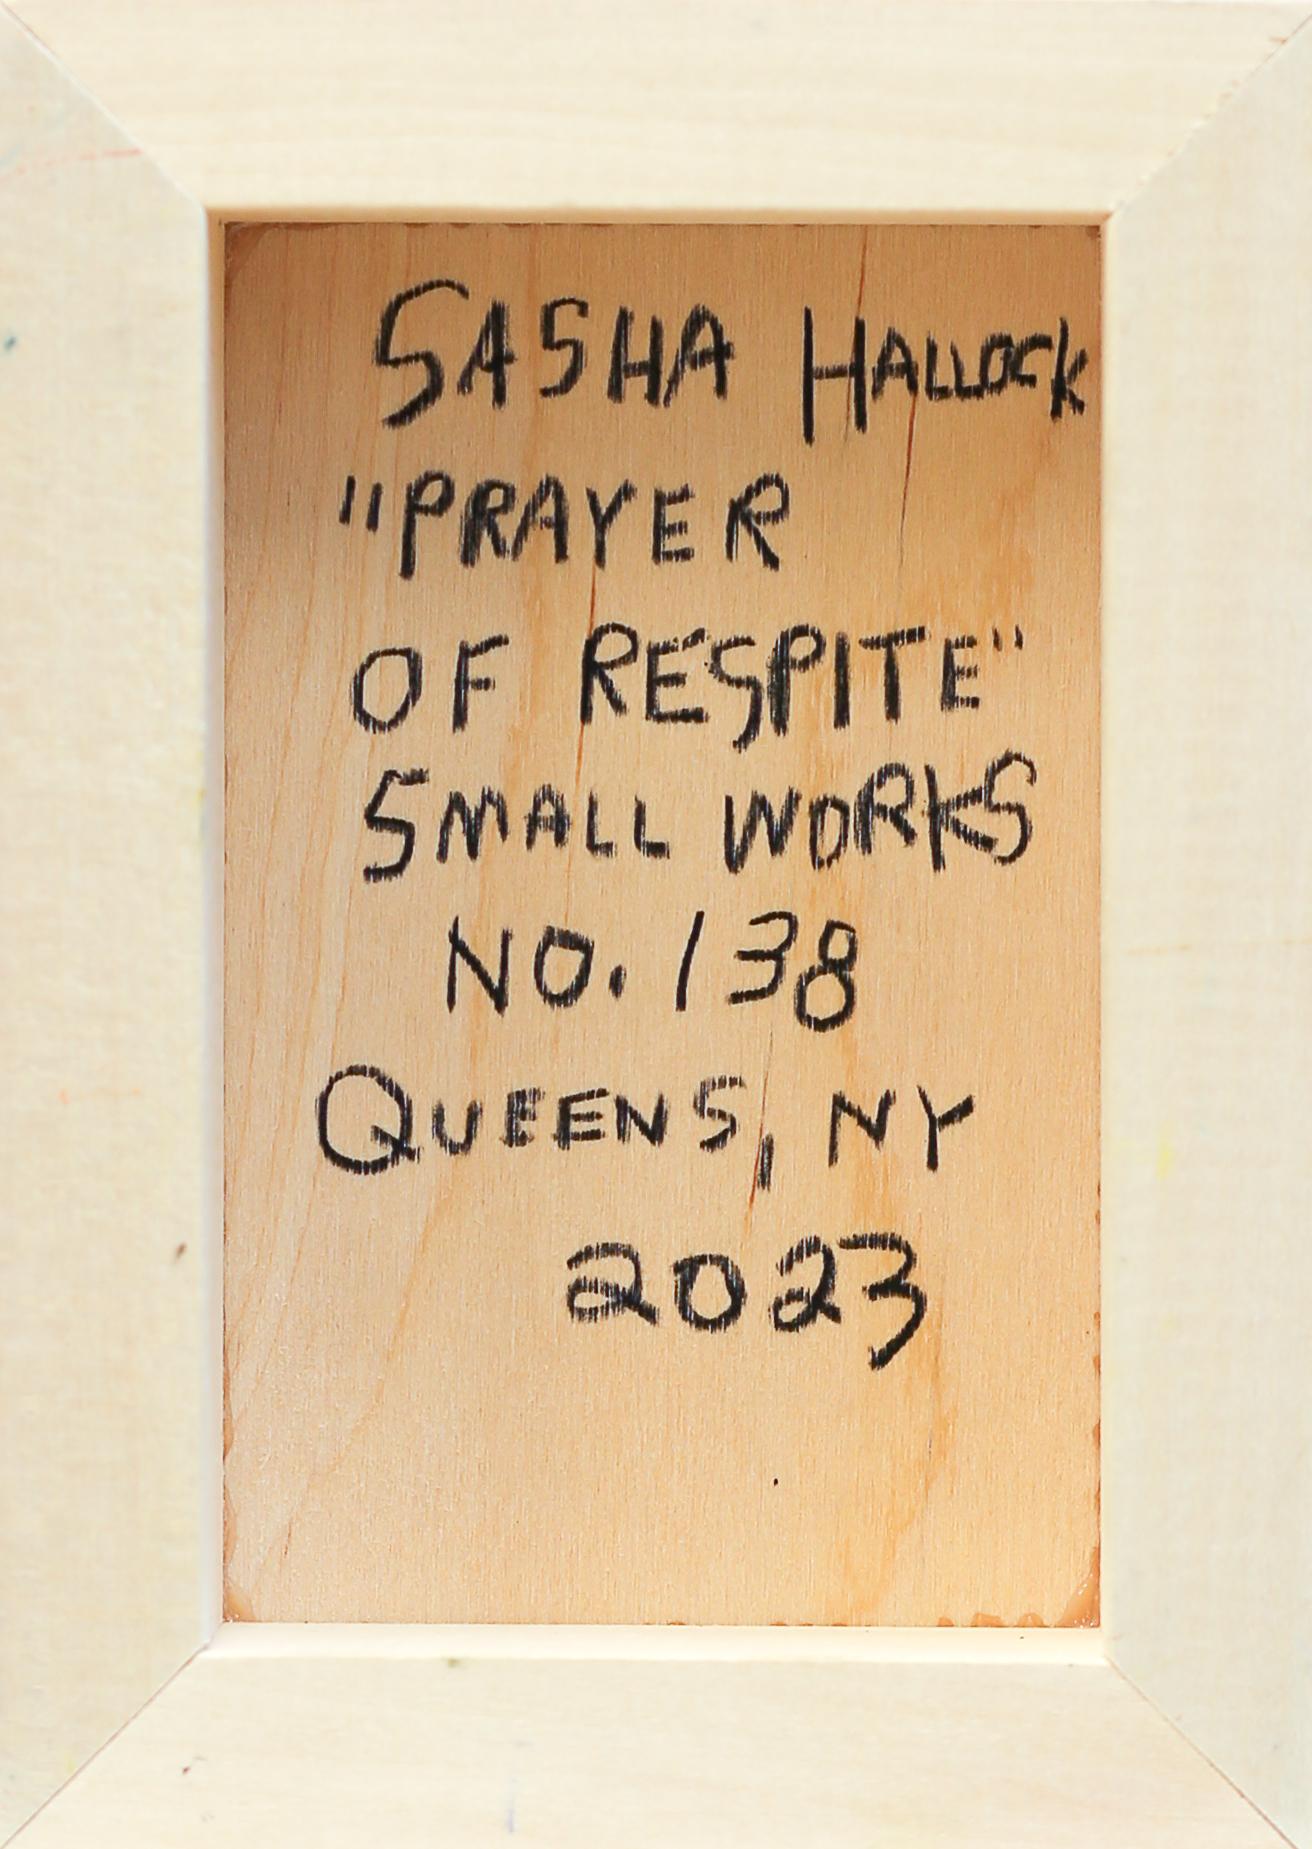 Prayer Of Respite: Small Works No. 138 For Sale 2